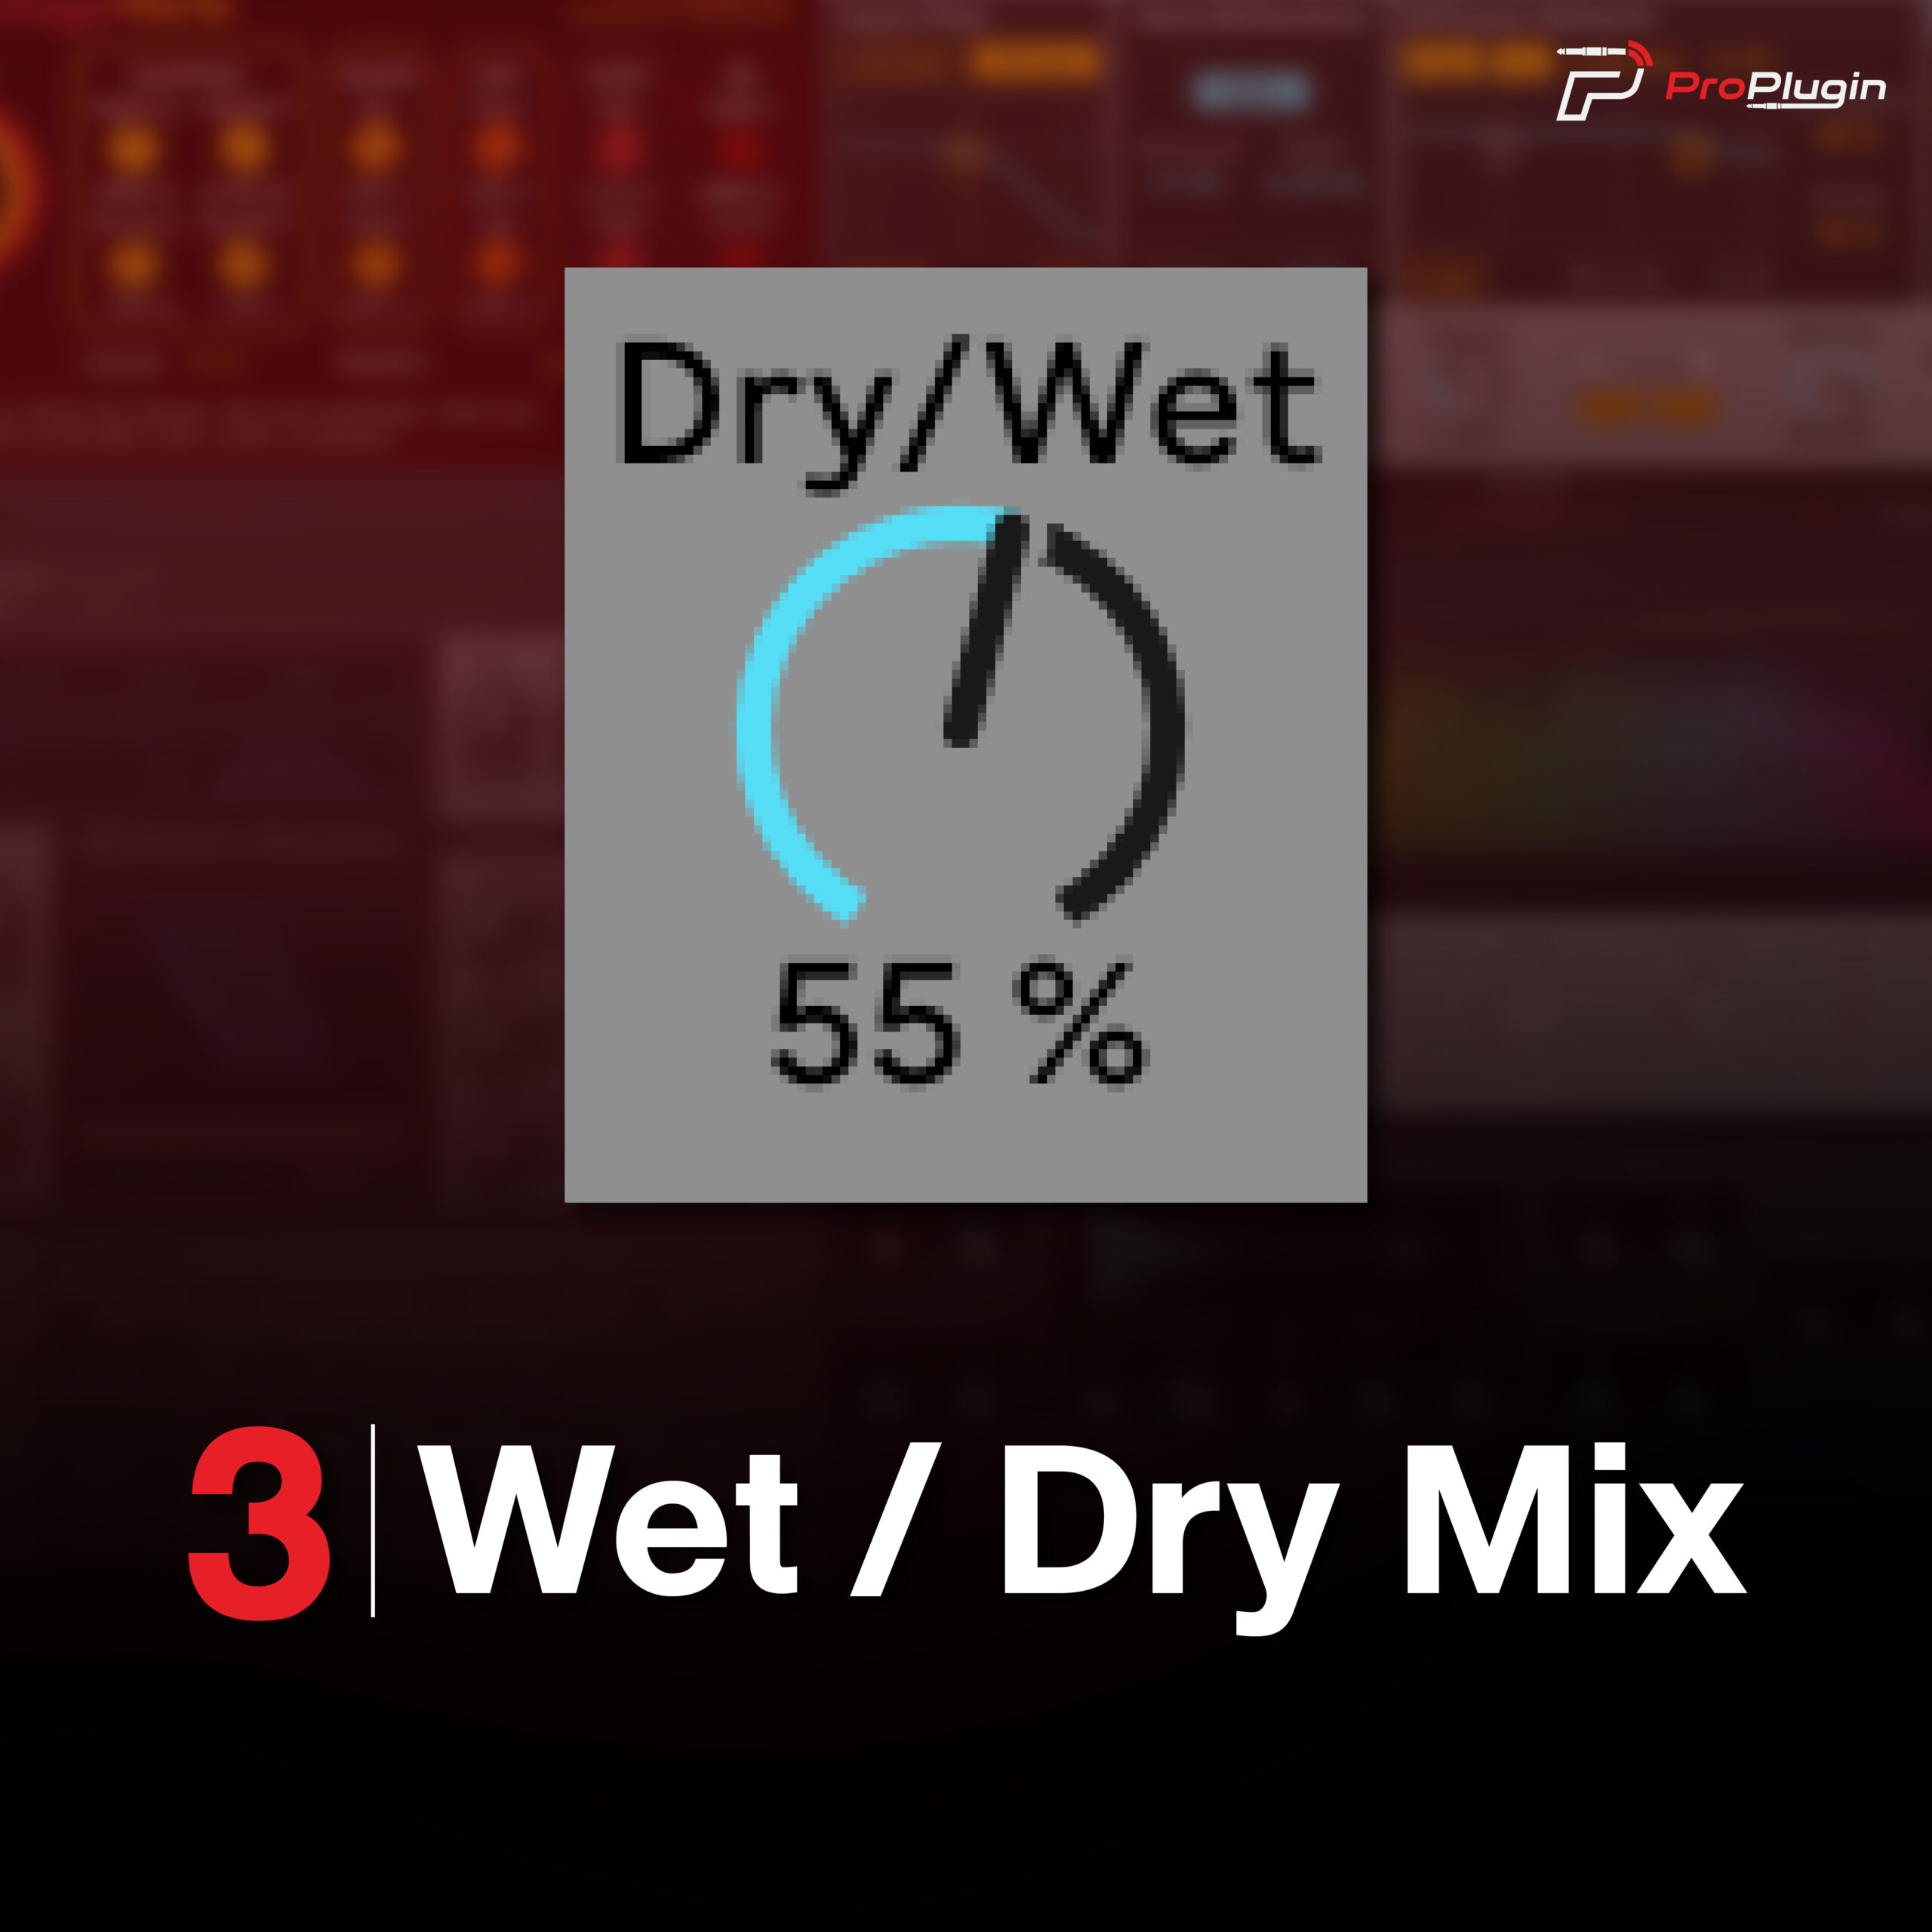 3. wat / Dry Mix